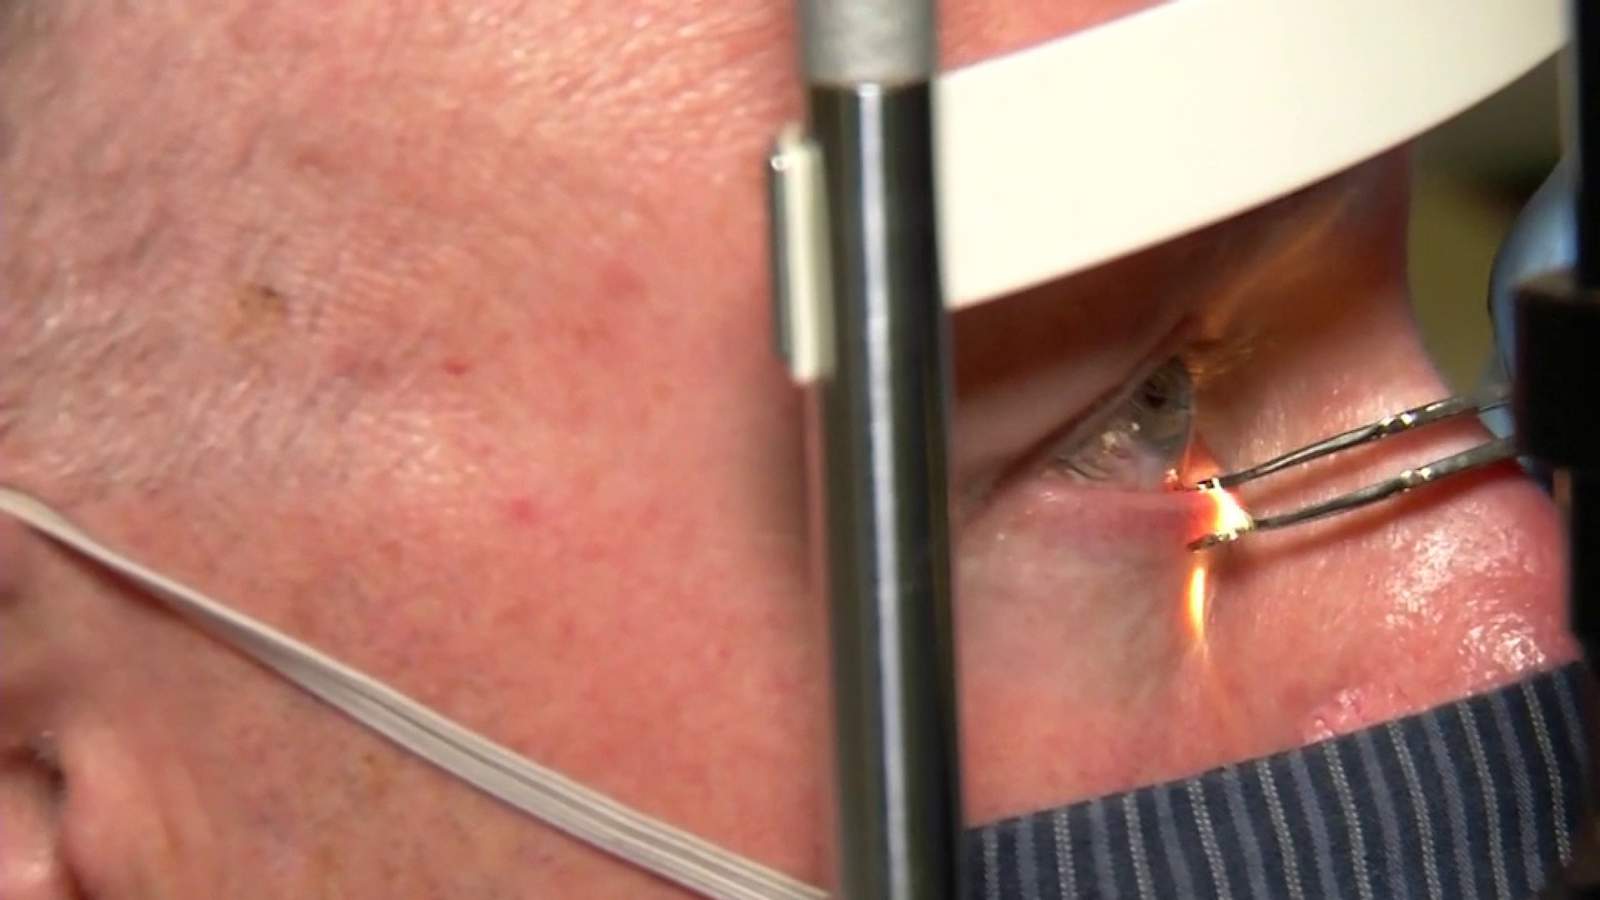 TearCare wearable device defeats dry eye